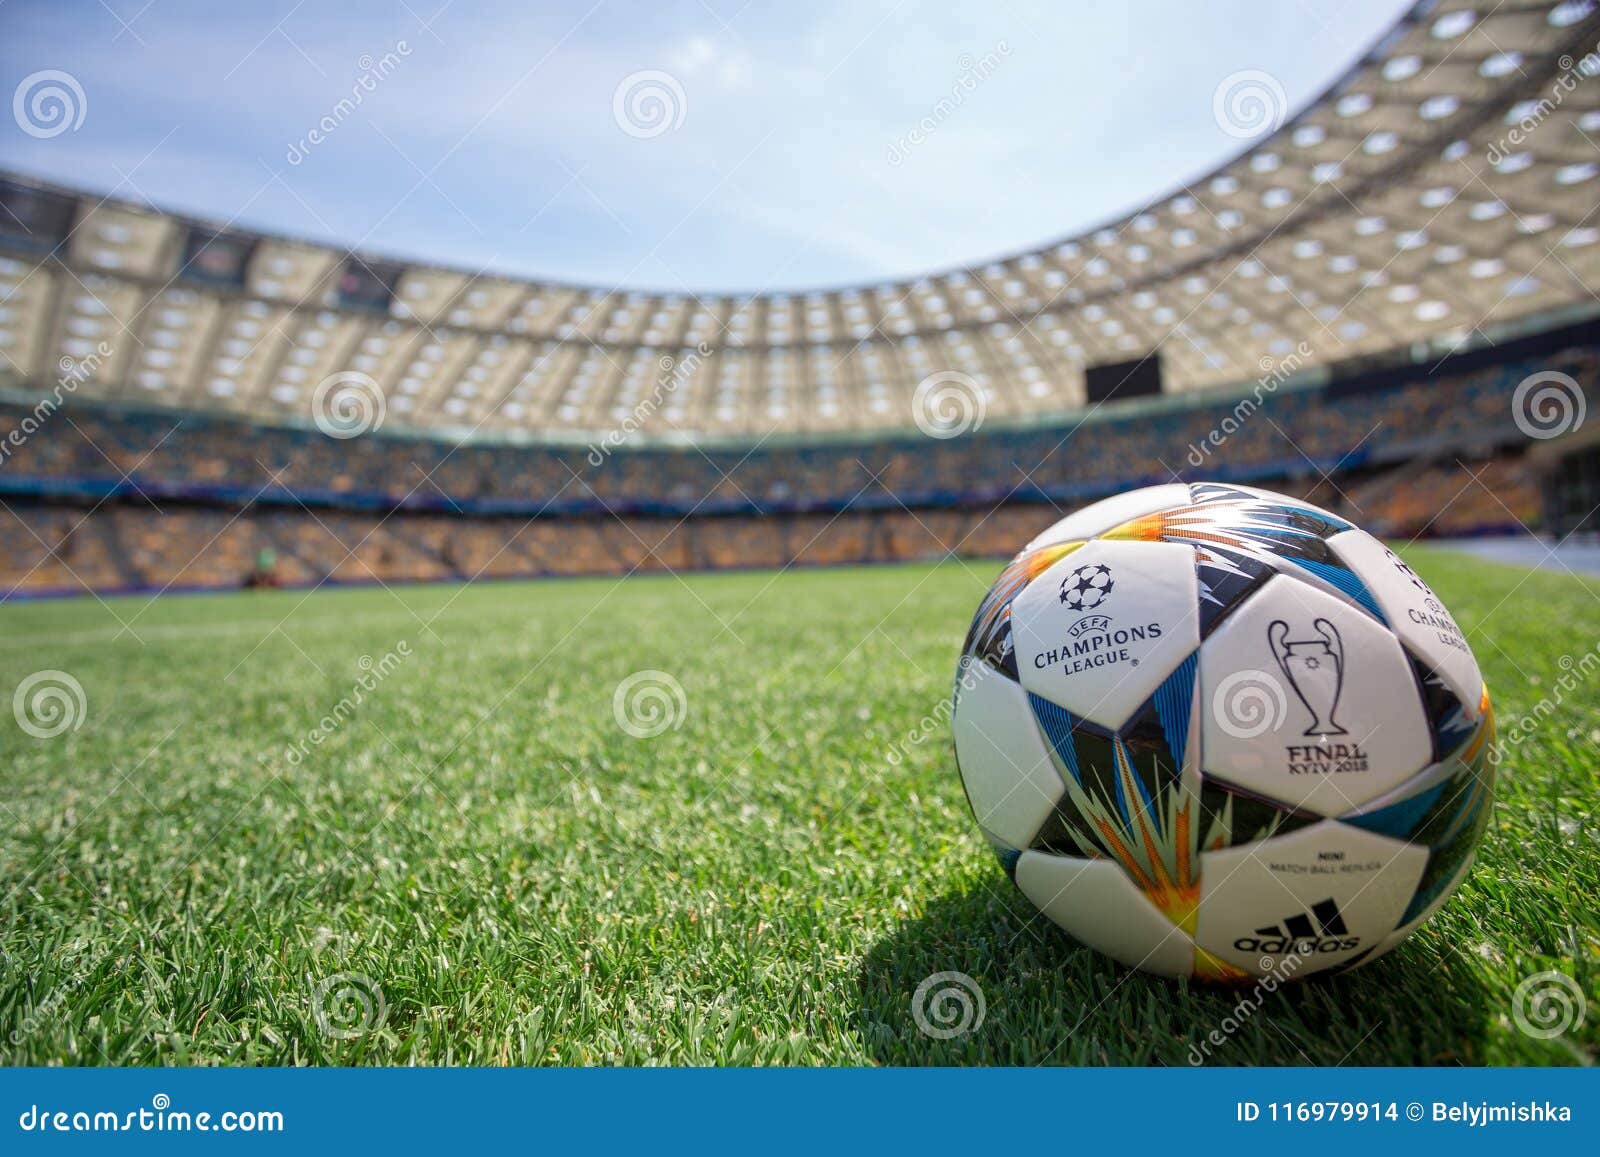 Kiev Ukraine May 16 2018 Uefa Champions League Final Kyiv Official Match Ball Editorial Stock Image Image Of Sport Kiev 116979914